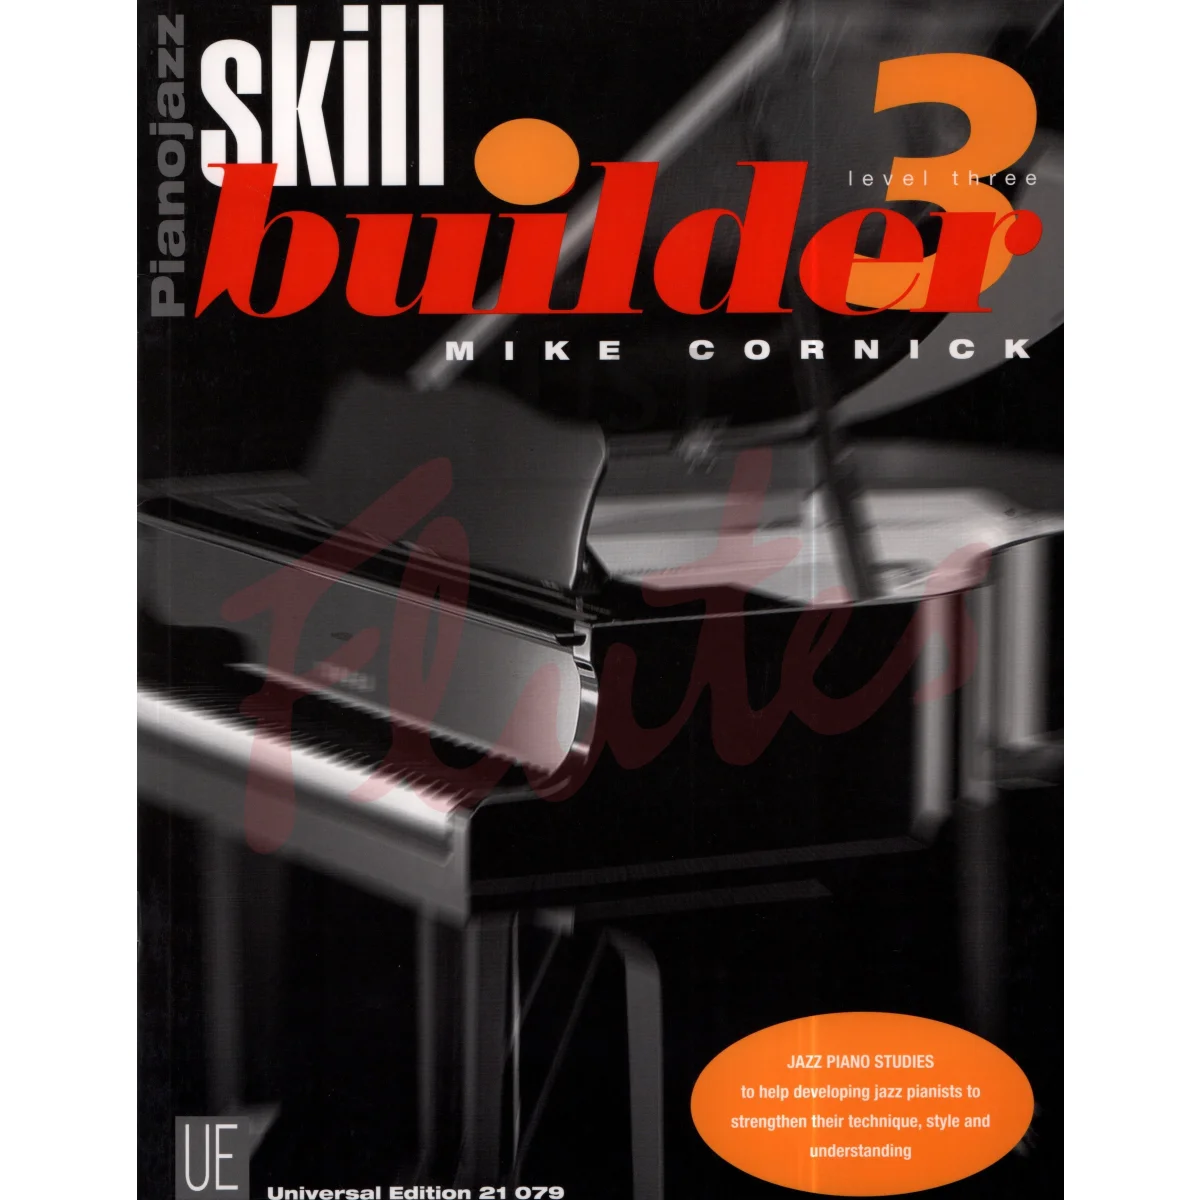 Skill Builder 3 for Piano